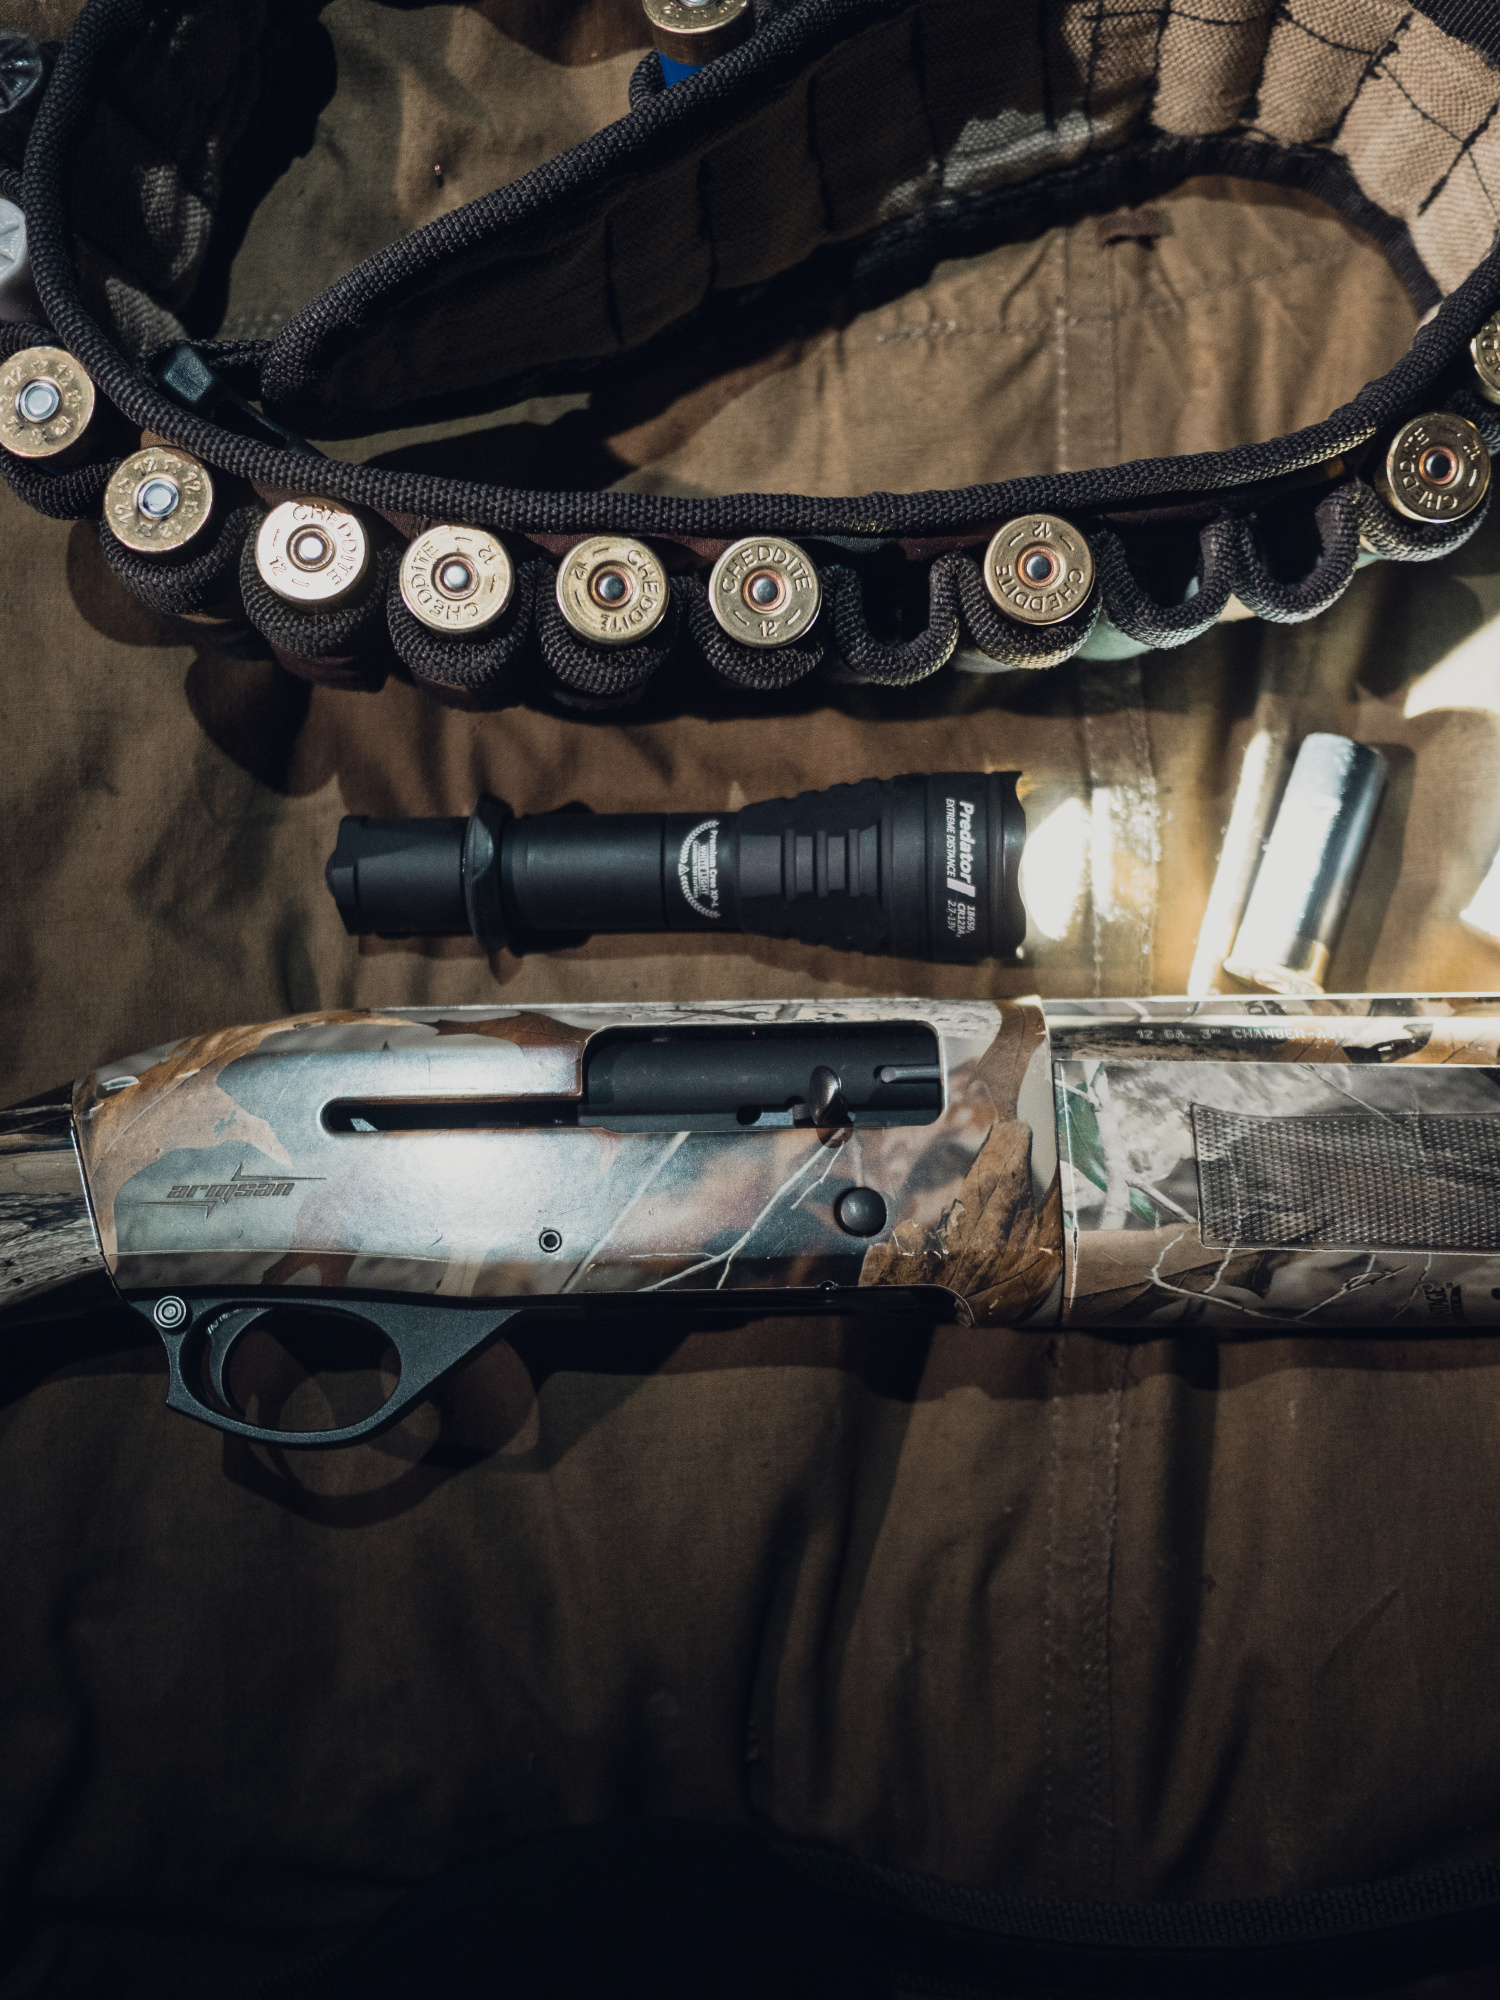 картинка Фонарь Armytek Predator Pro Hunting Kit